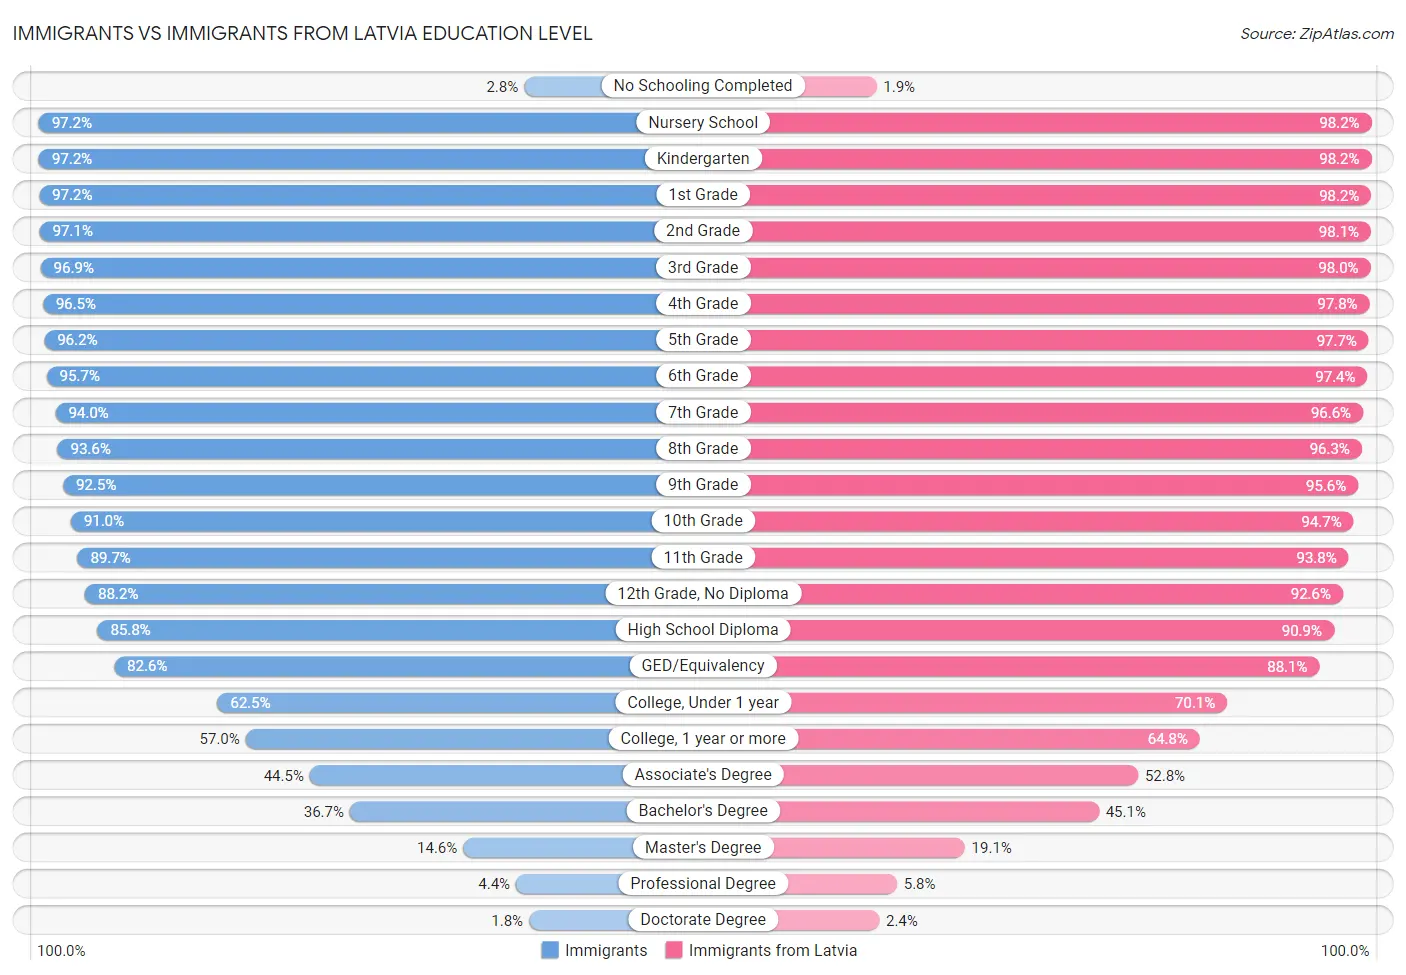 Immigrants vs Immigrants from Latvia Education Level